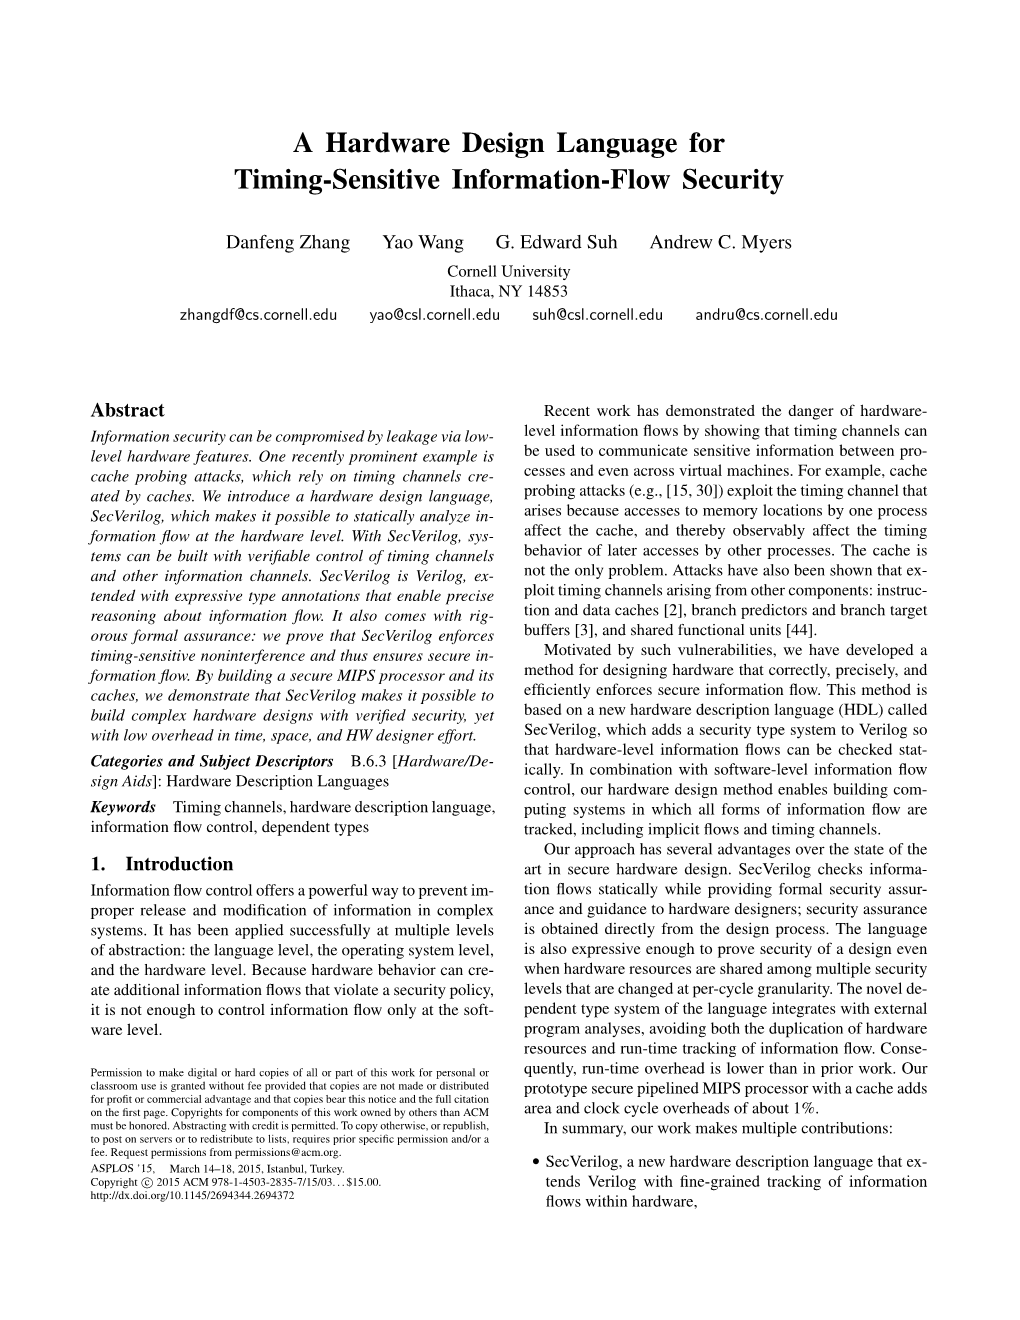 A Hardware Design Language for Timing-Sensitive Information-Flow Security